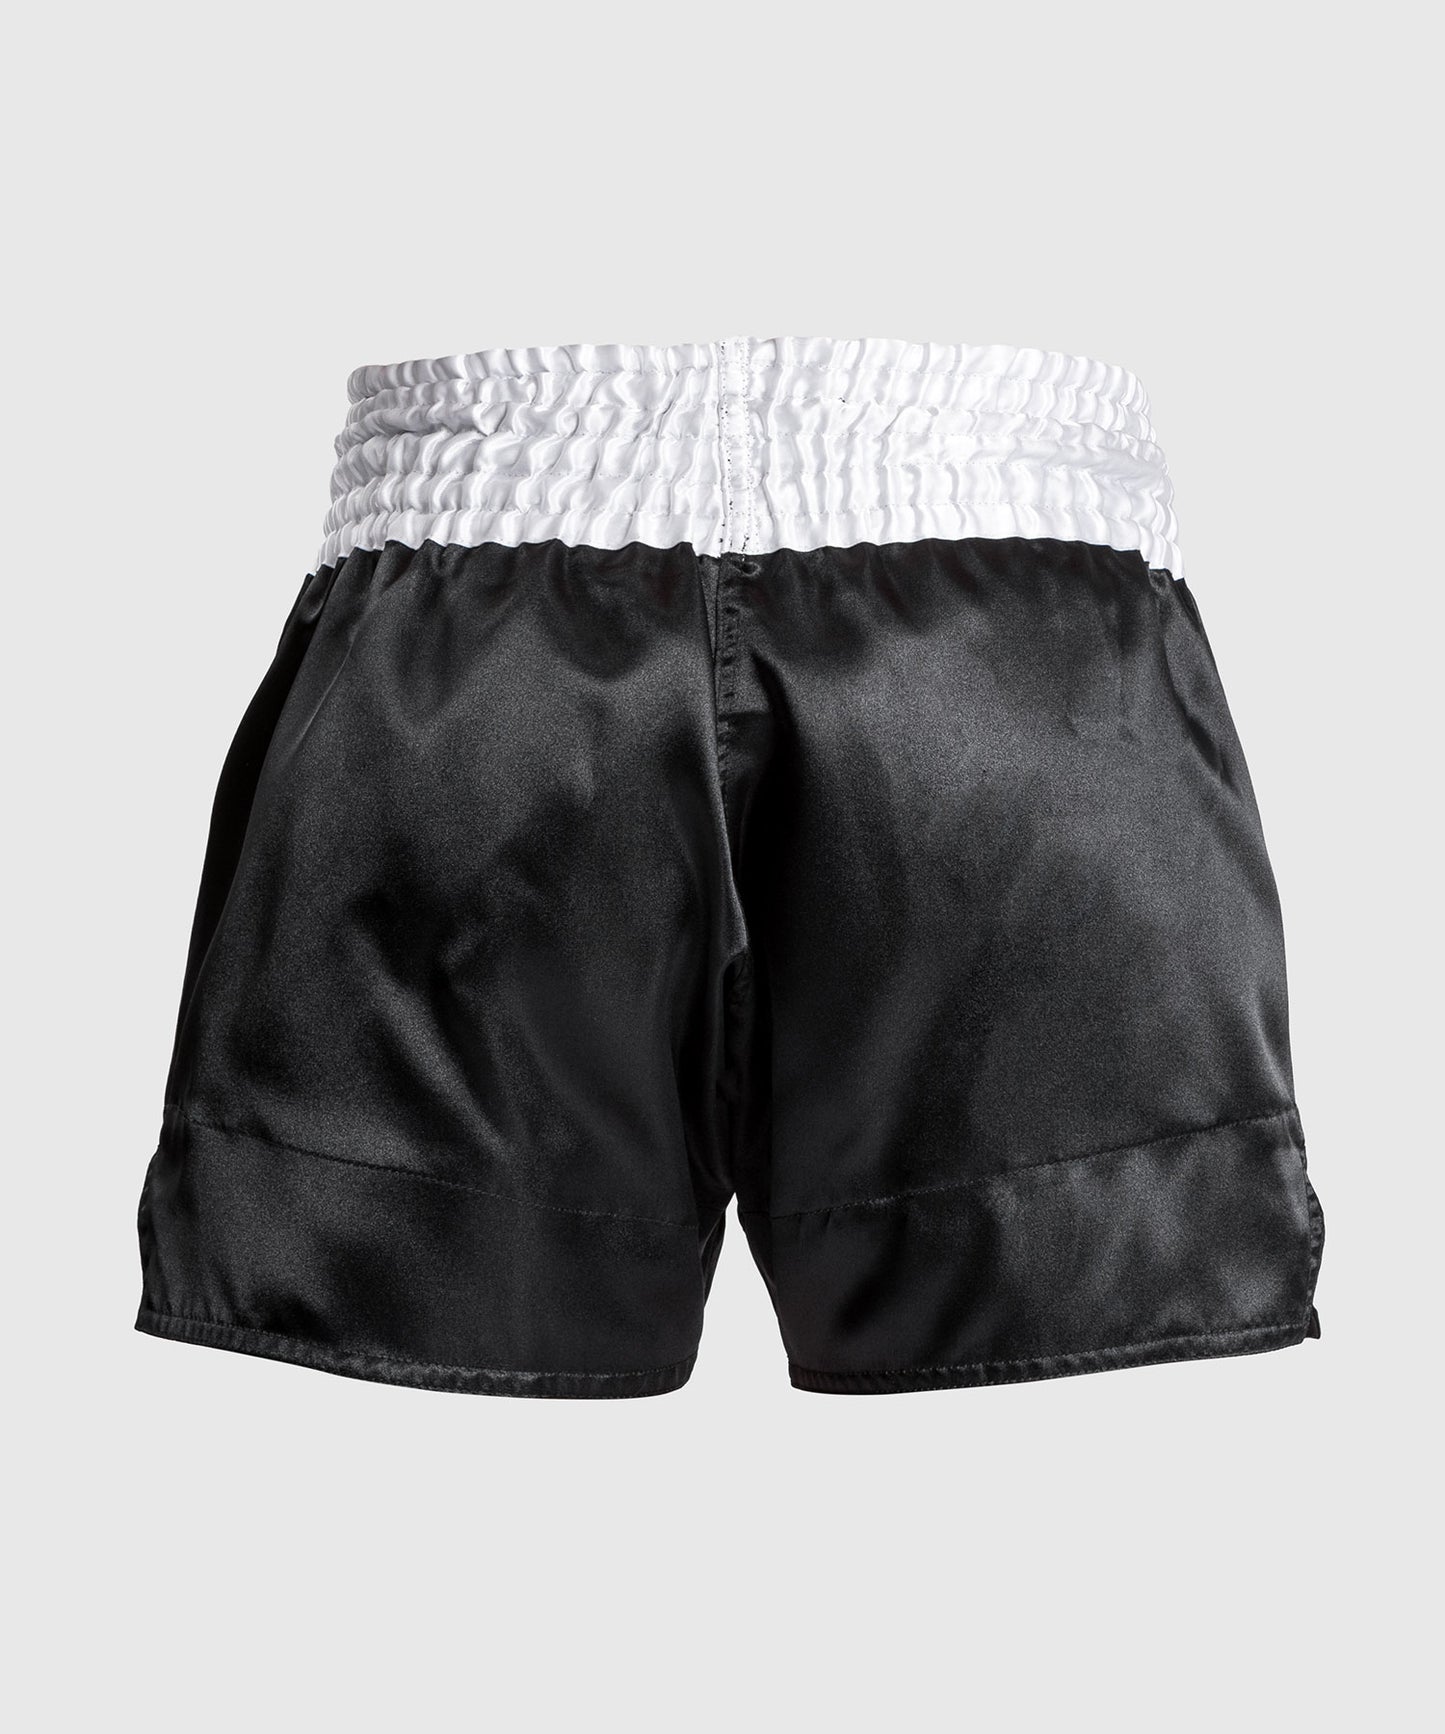 Venum Classic - Short Muay Thaï Blanc/Noir/Blanc - Shorts de boxe thaï